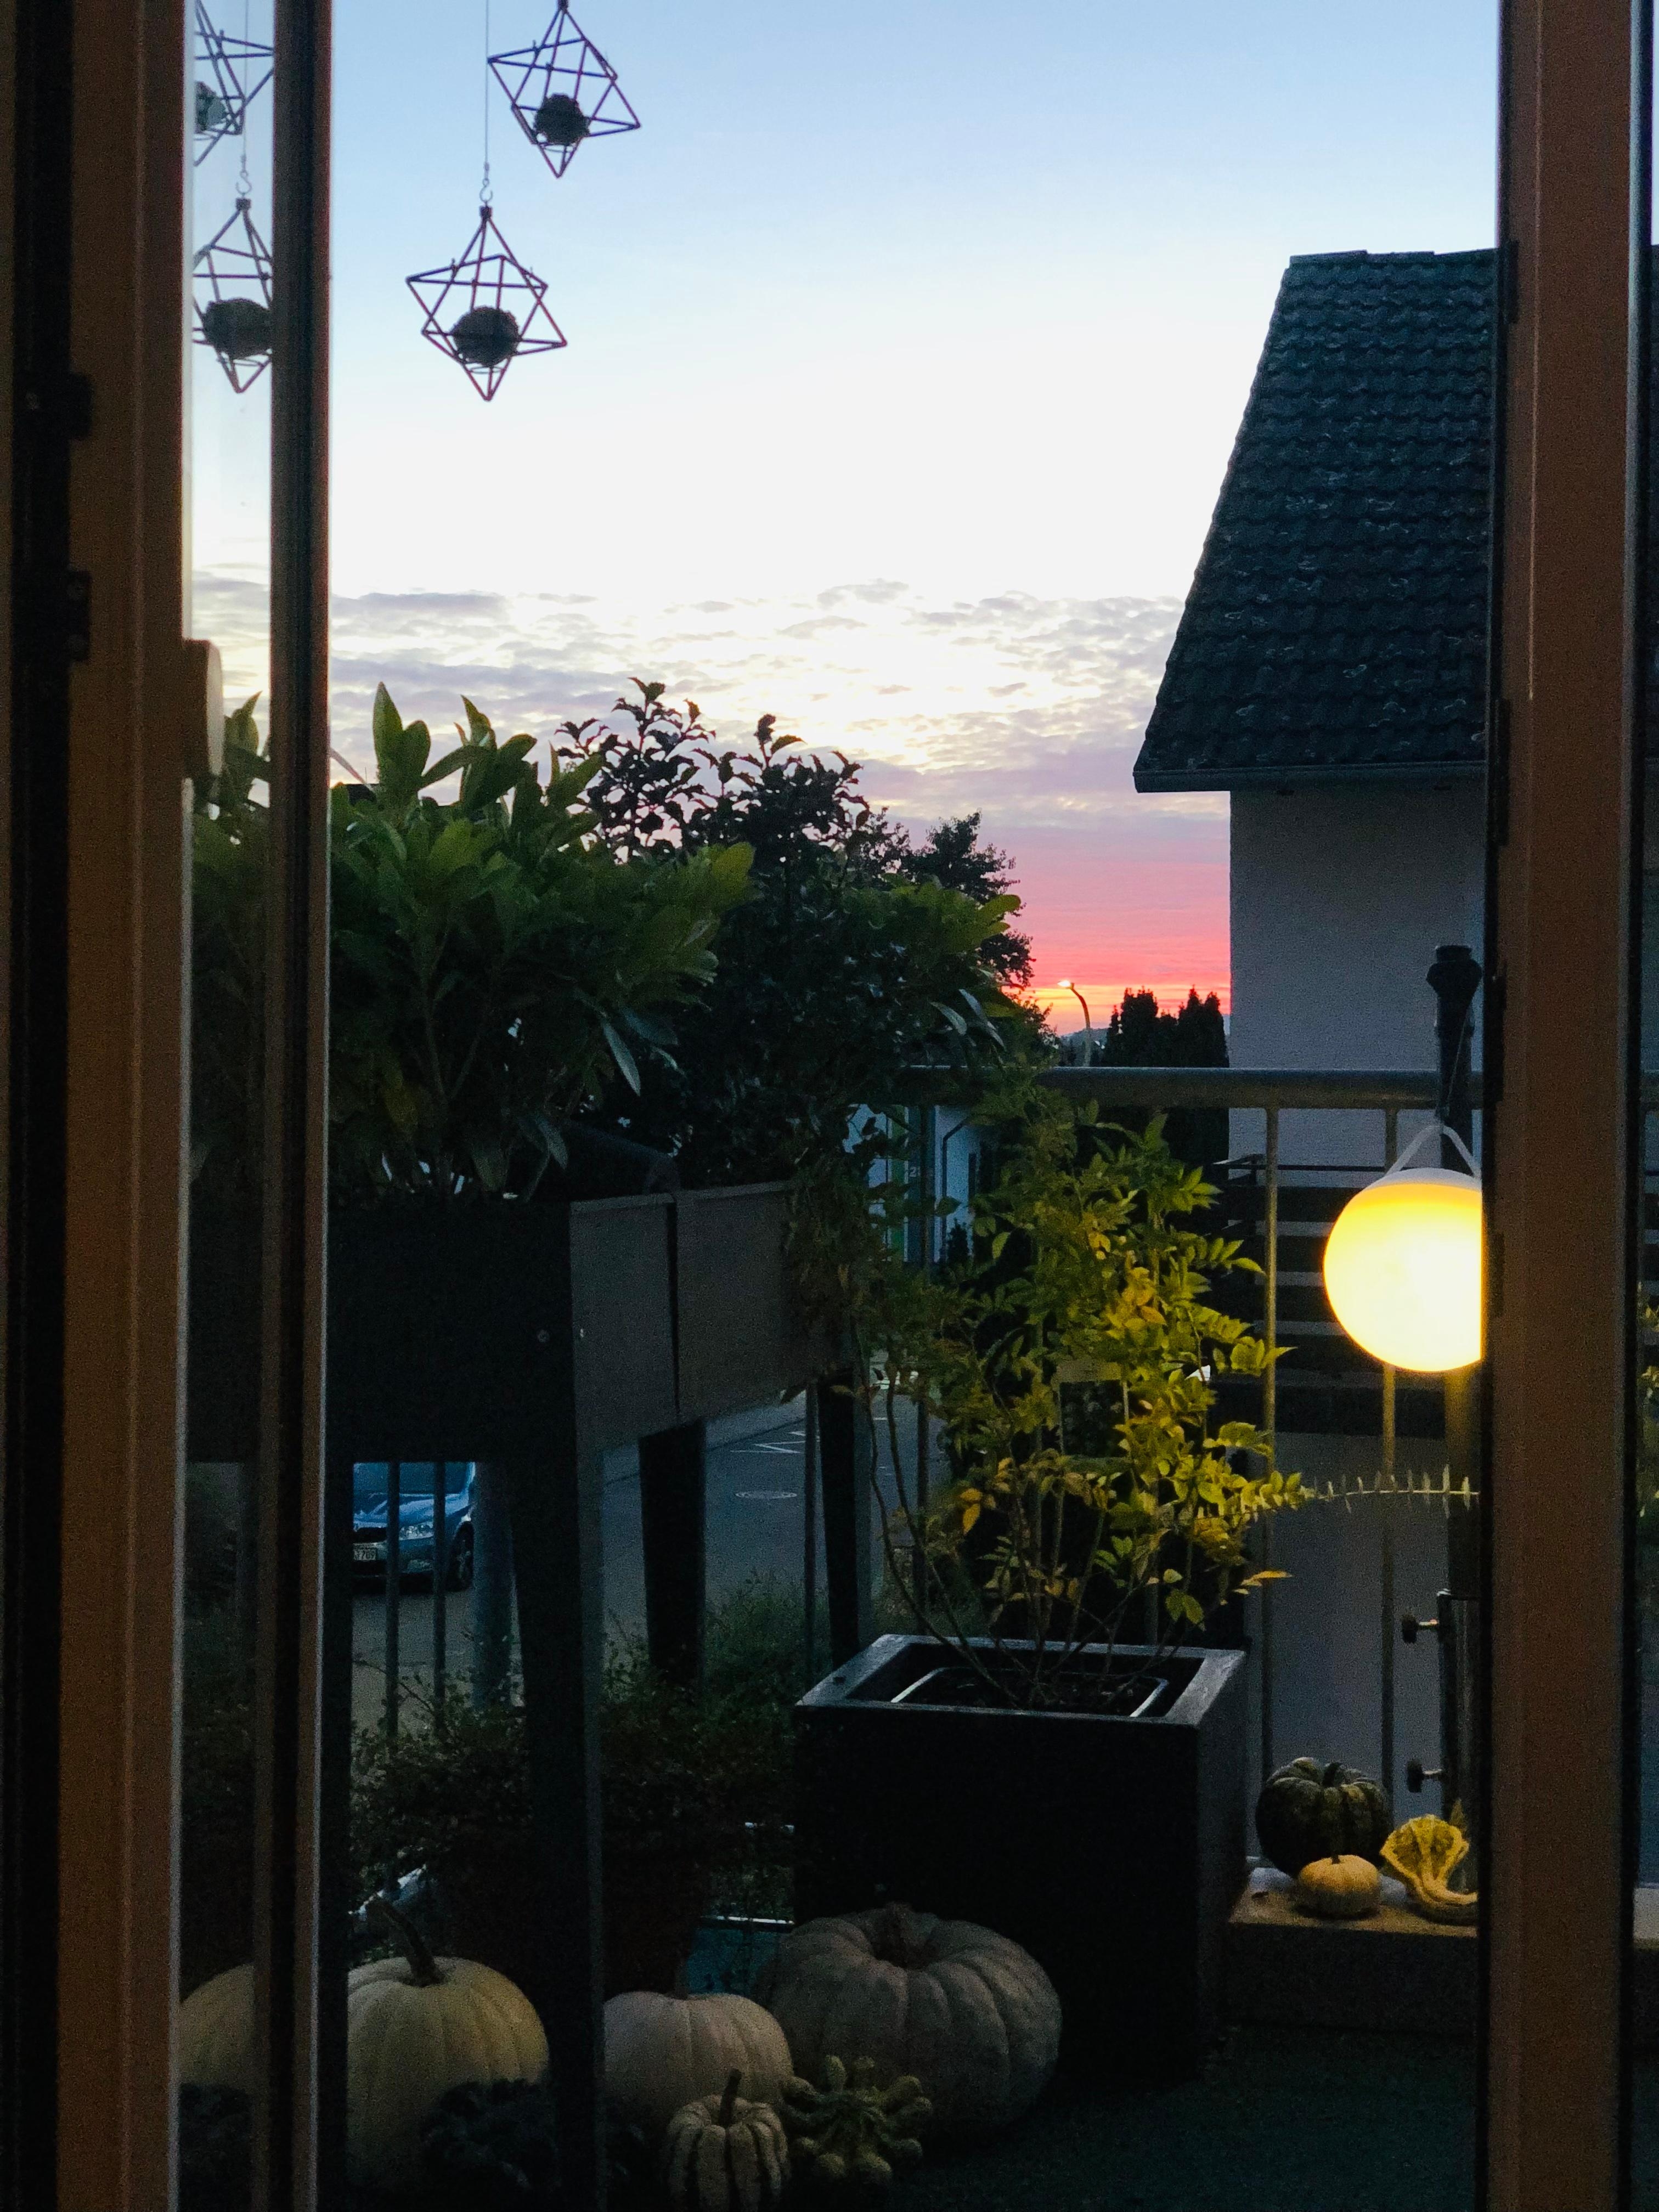 Sonnenuntergang. #eswirddunkel #herbst #balkonien 